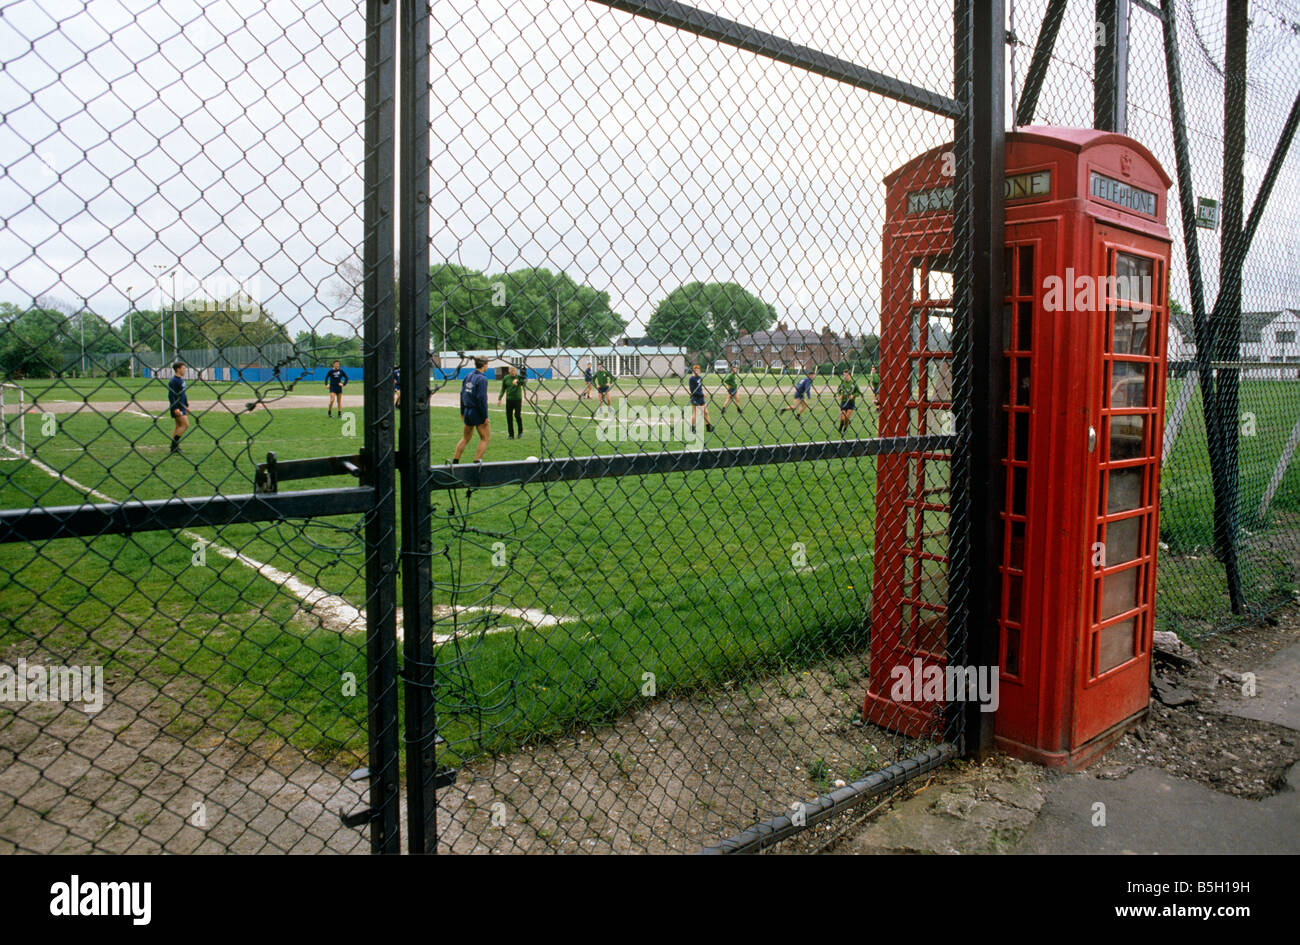 UK England Manchester Rusholme K6 Phone box into Manchester City football clubs Platt Lane Training Ground fence Stock Photo